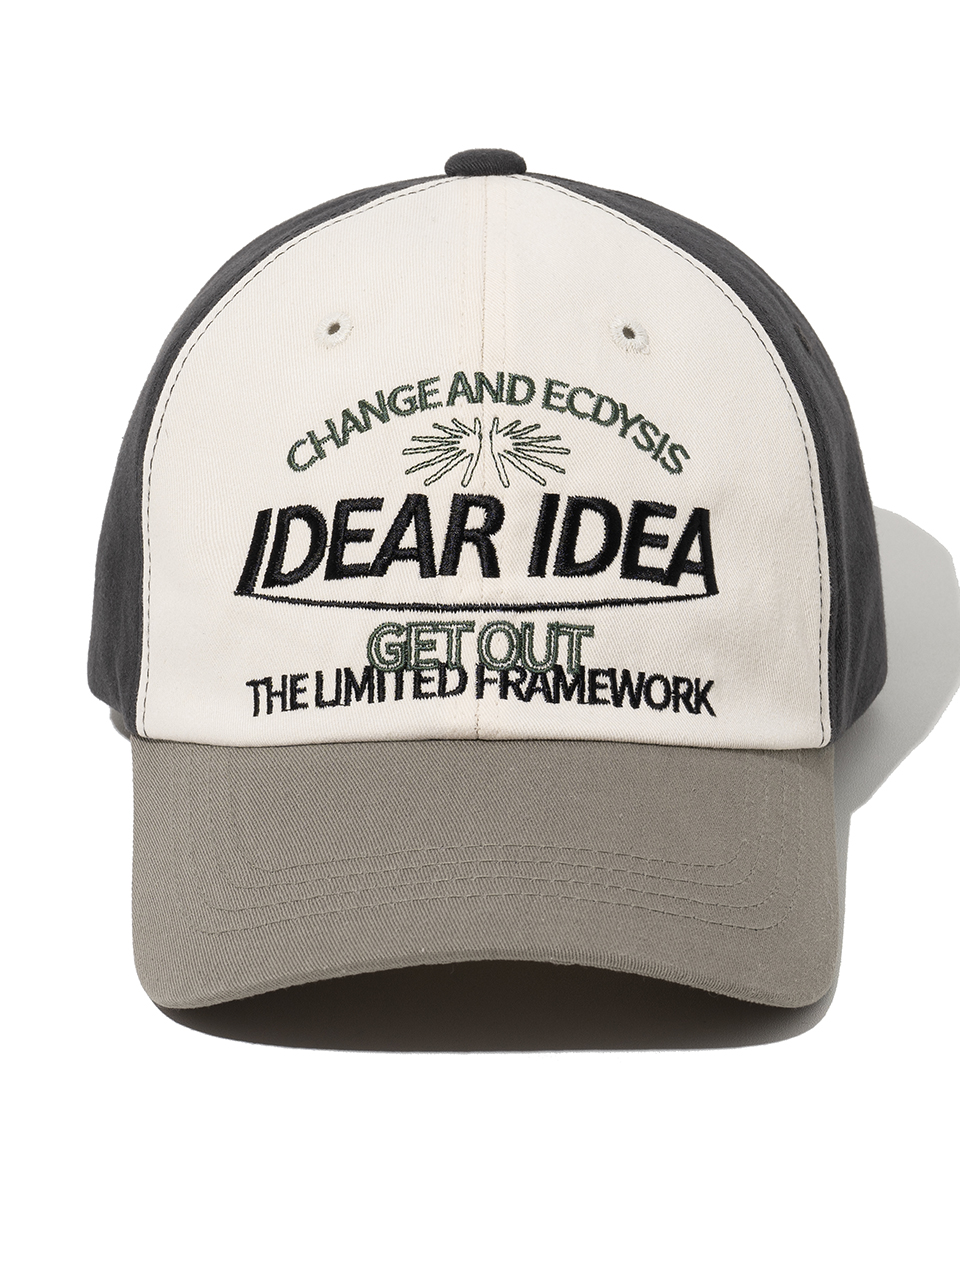 Idear Idea Ball Cap - Charcoal